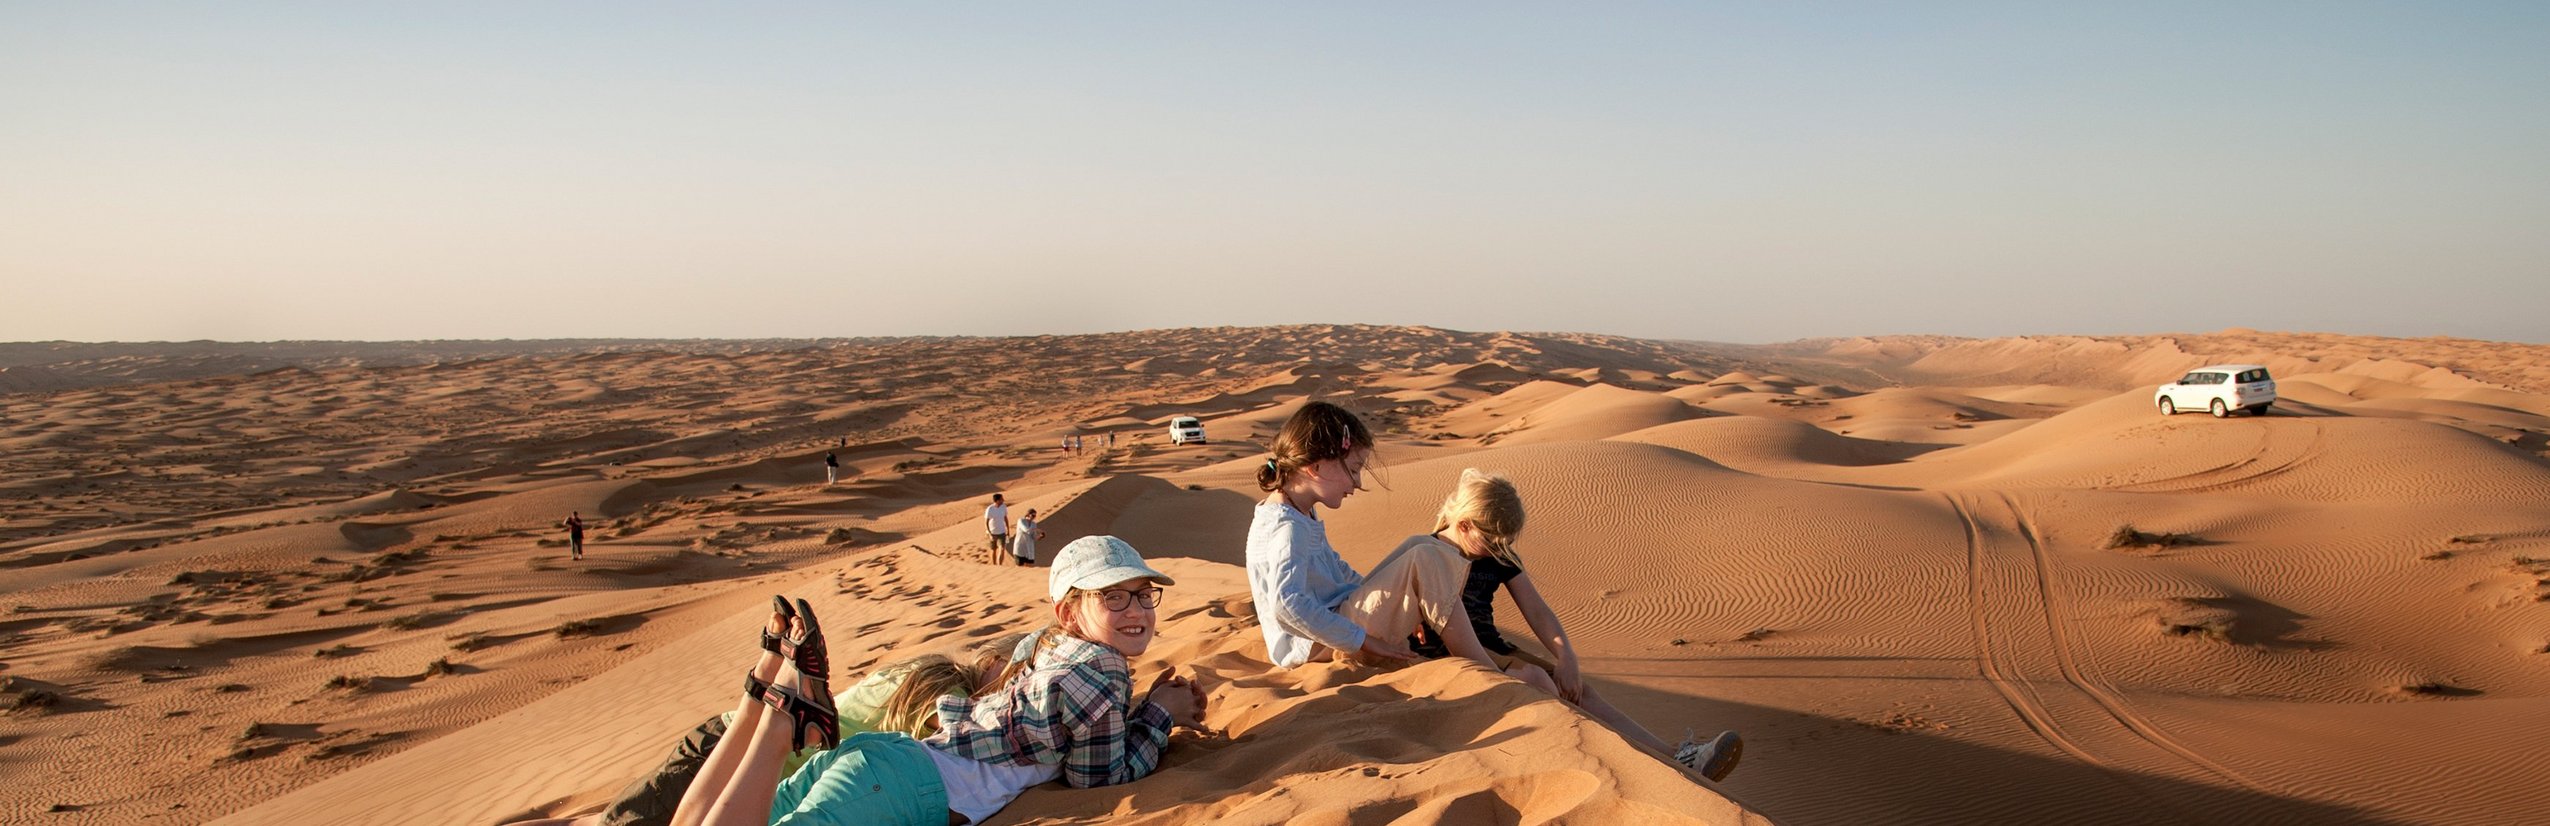 Oman Familienreise - Kinder auf Dünen